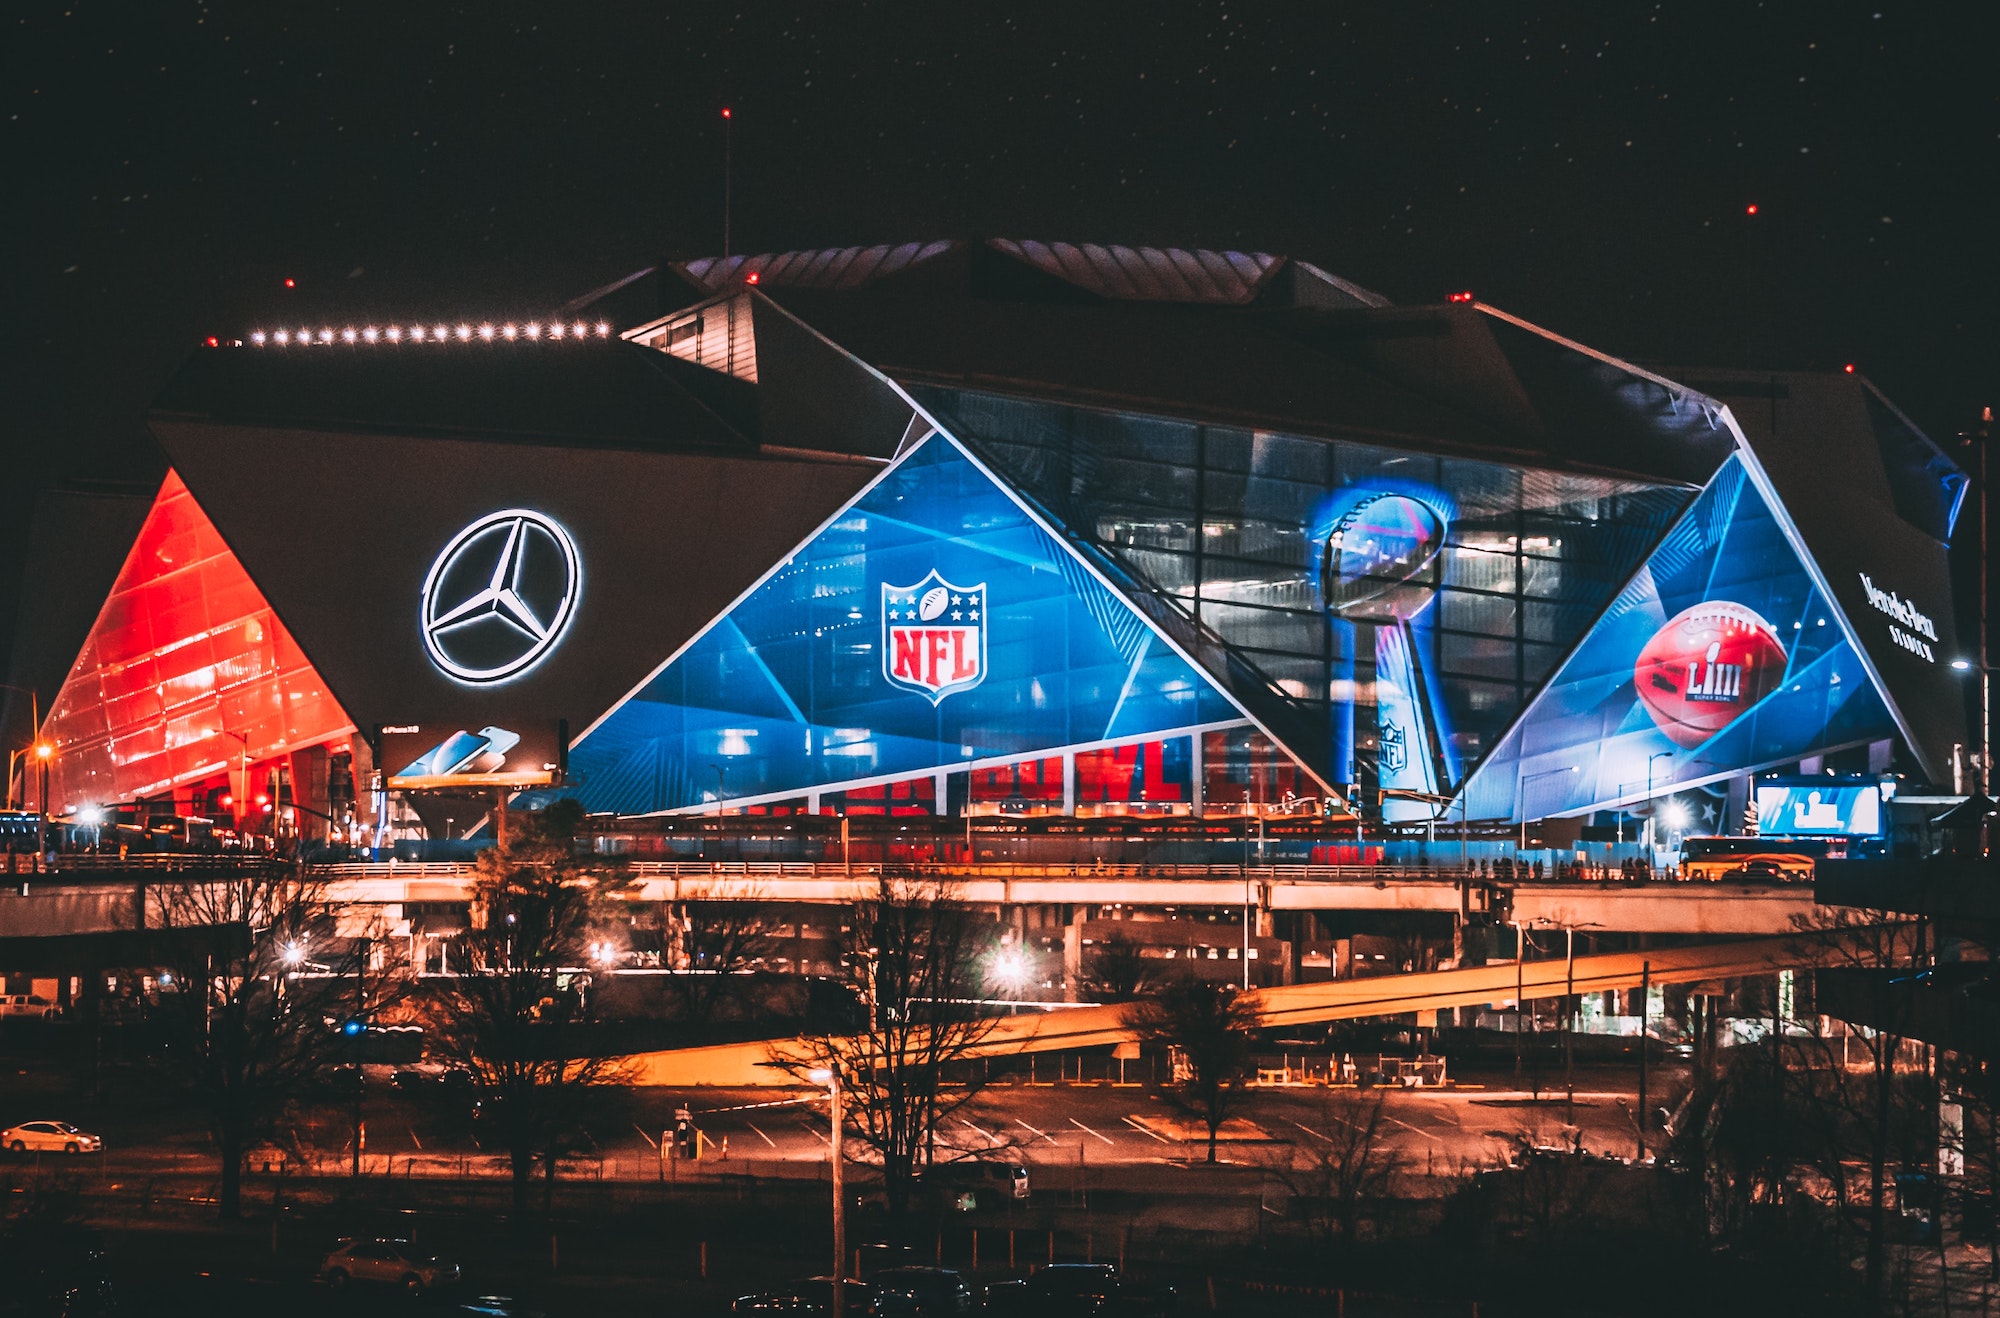 stadium american football GCEAqghDxRo unsplash The Top 5 US Solar-Powered Sports Stadiums